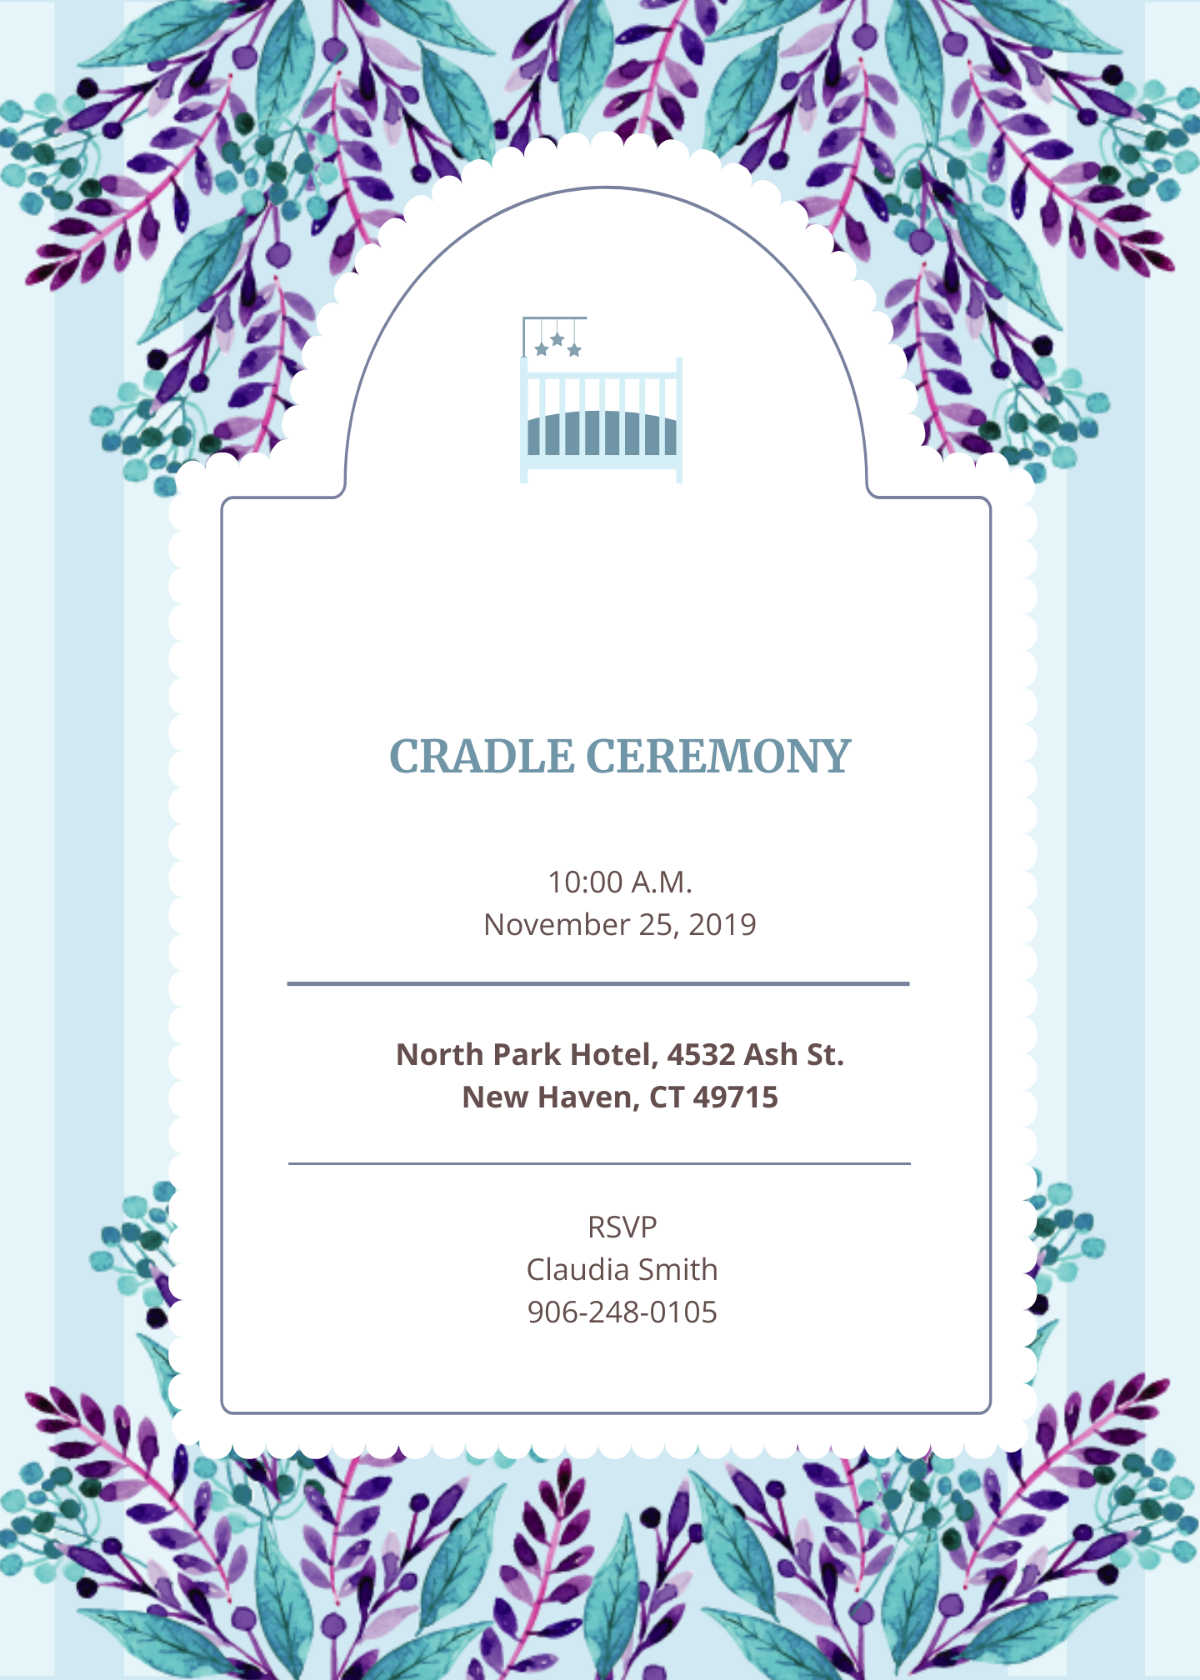 Cradle Ceremony Invitation Template